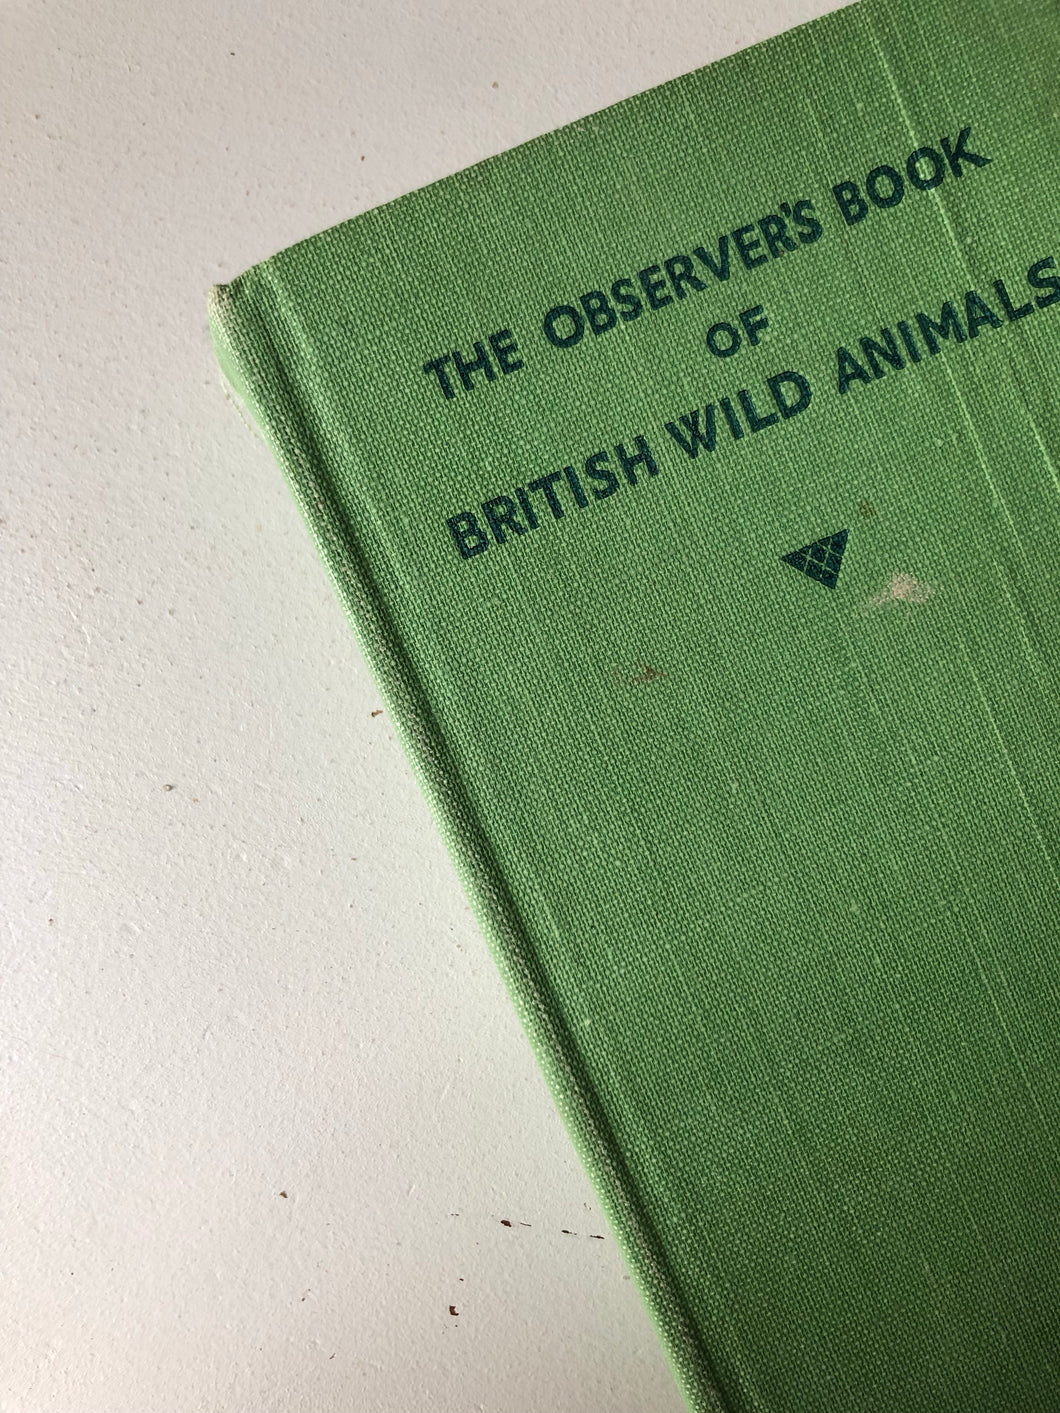 Observer book of British Wild Animals